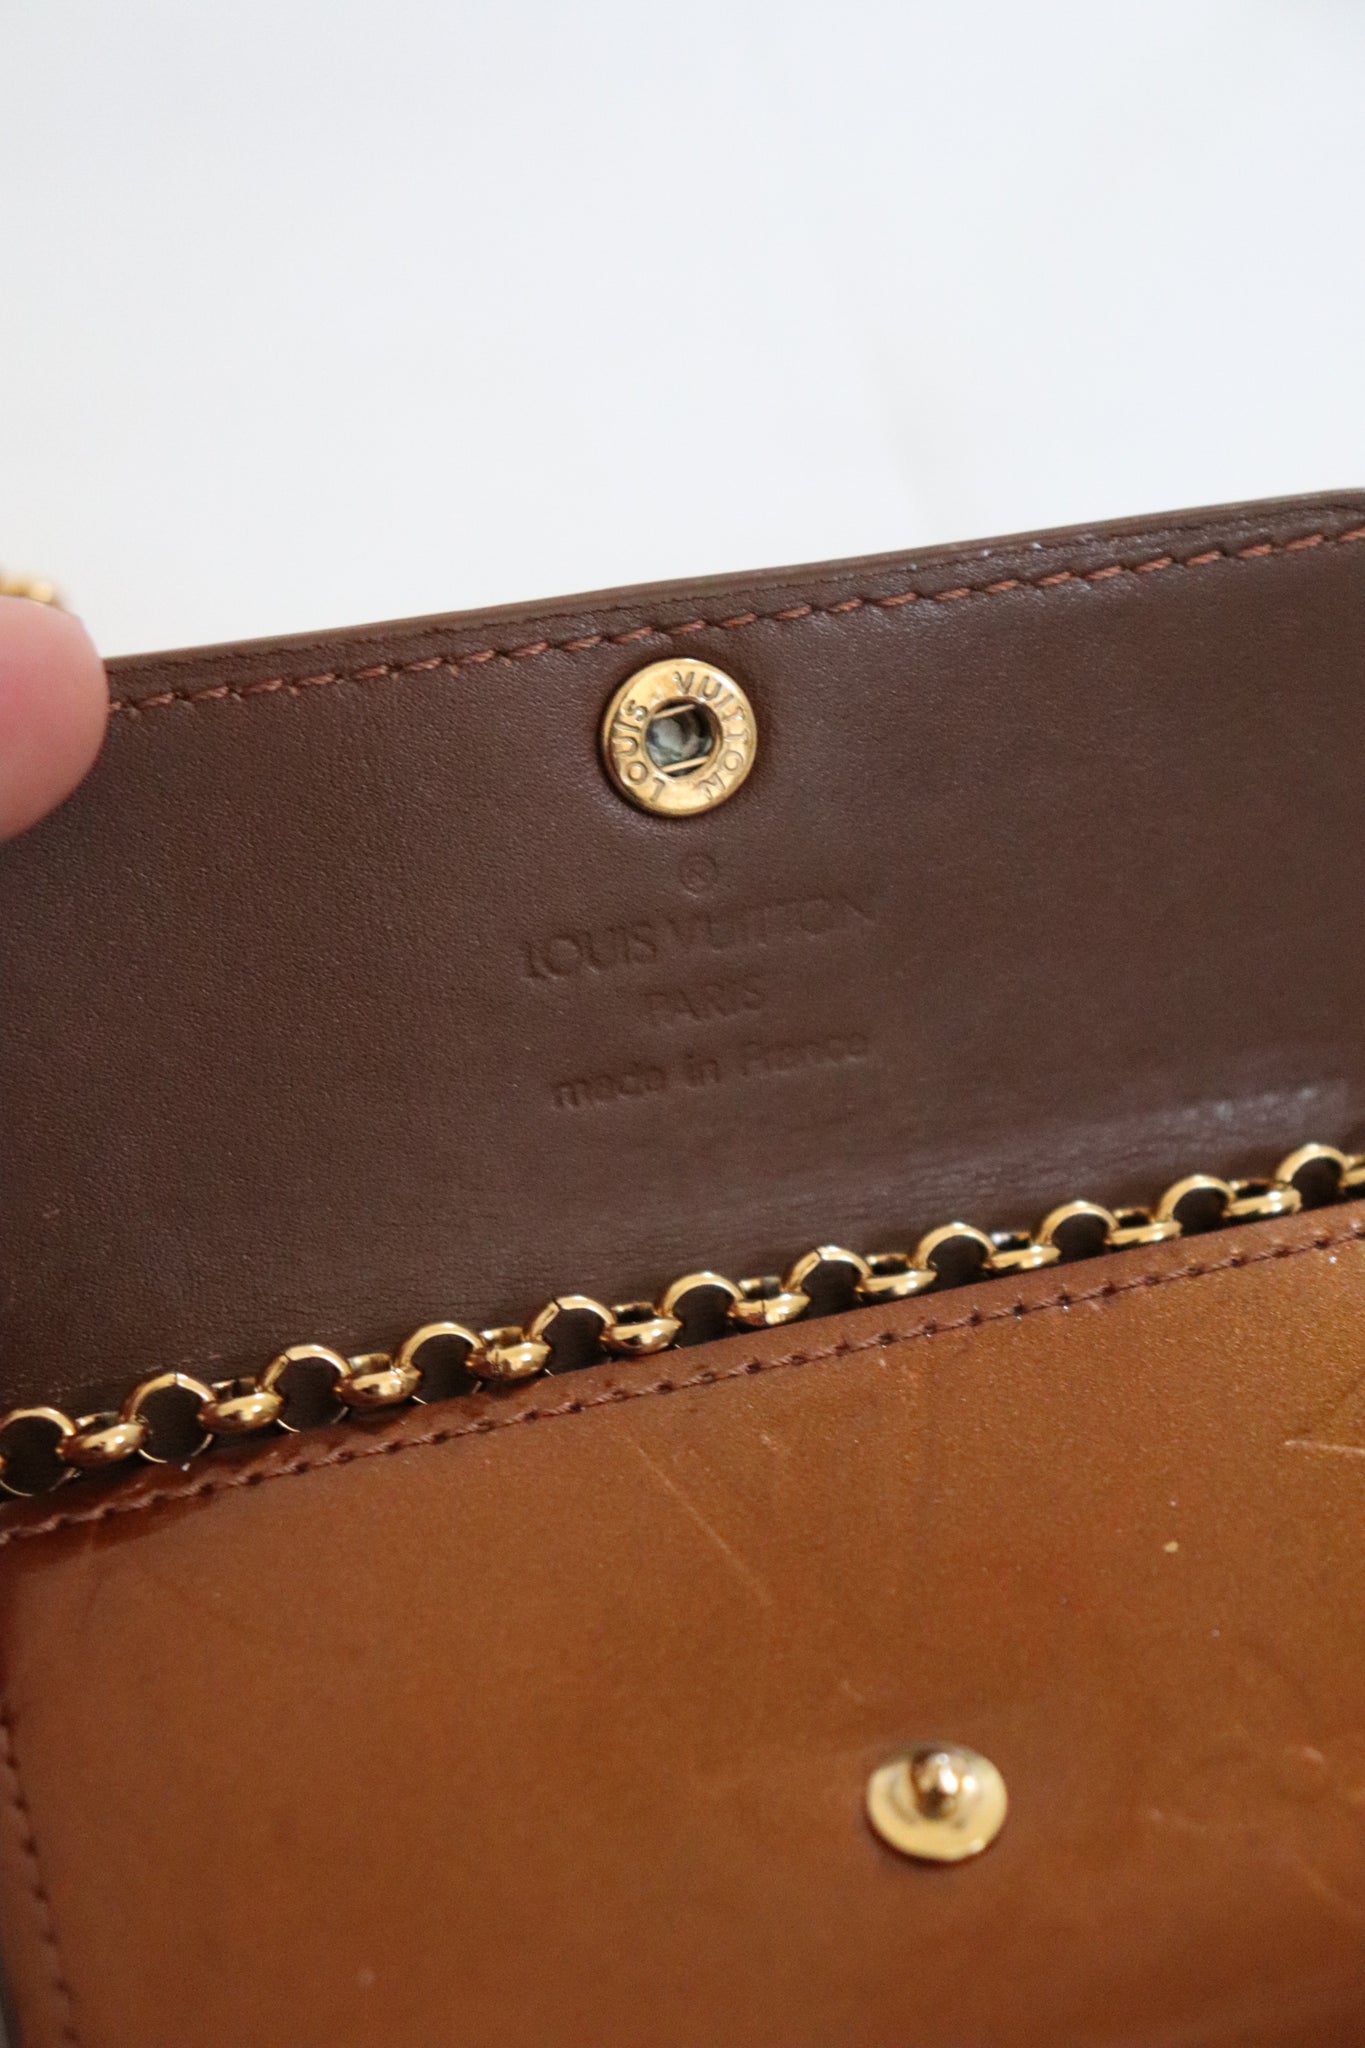 Louis Vuitton Monogram Ludlow Wallet